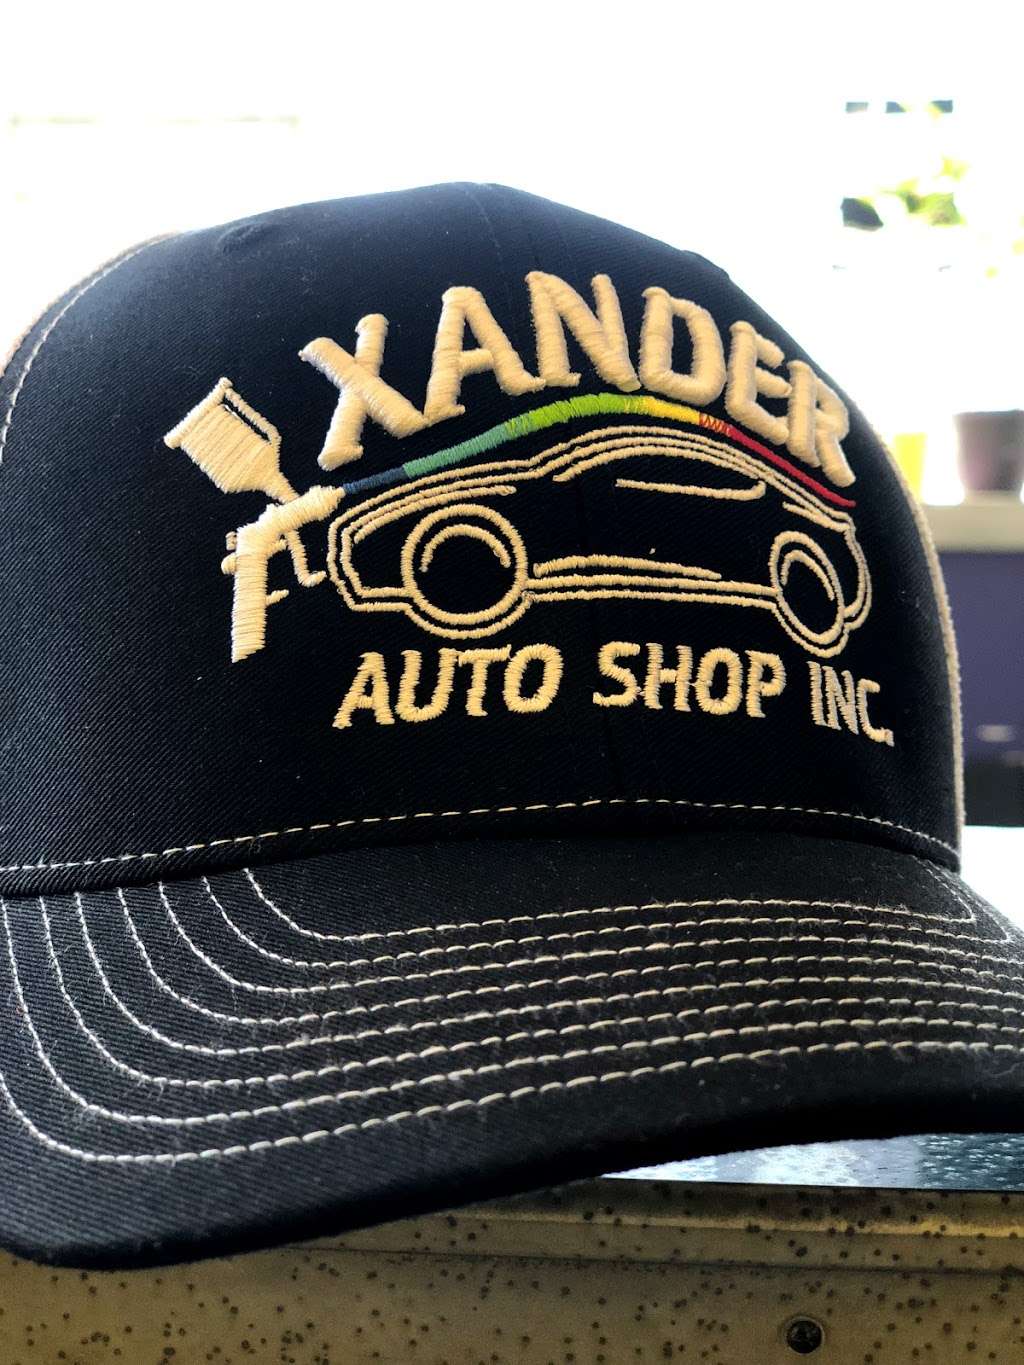 Xander Auto Shop | 3101 Ridgeland Ave, Berwyn, IL 60402, USA | Phone: (708) 484-9005